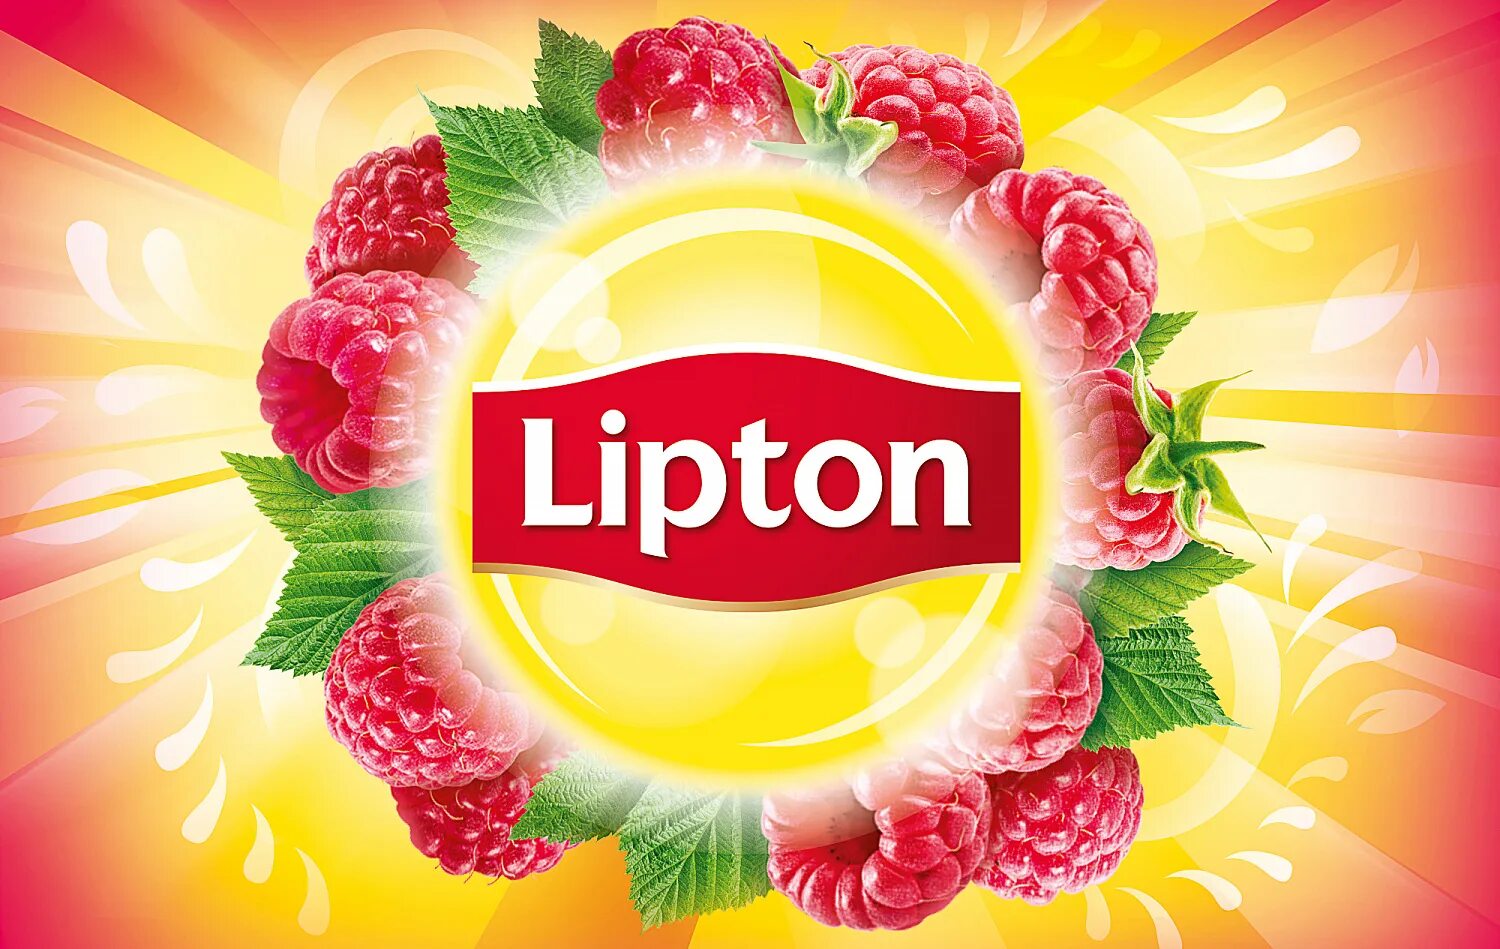 Логотип ЛИПТОНА. Холодный чай Липтон логотип. Чай Липтон логотип. Холодный зеленый чай Липтон этикетка.